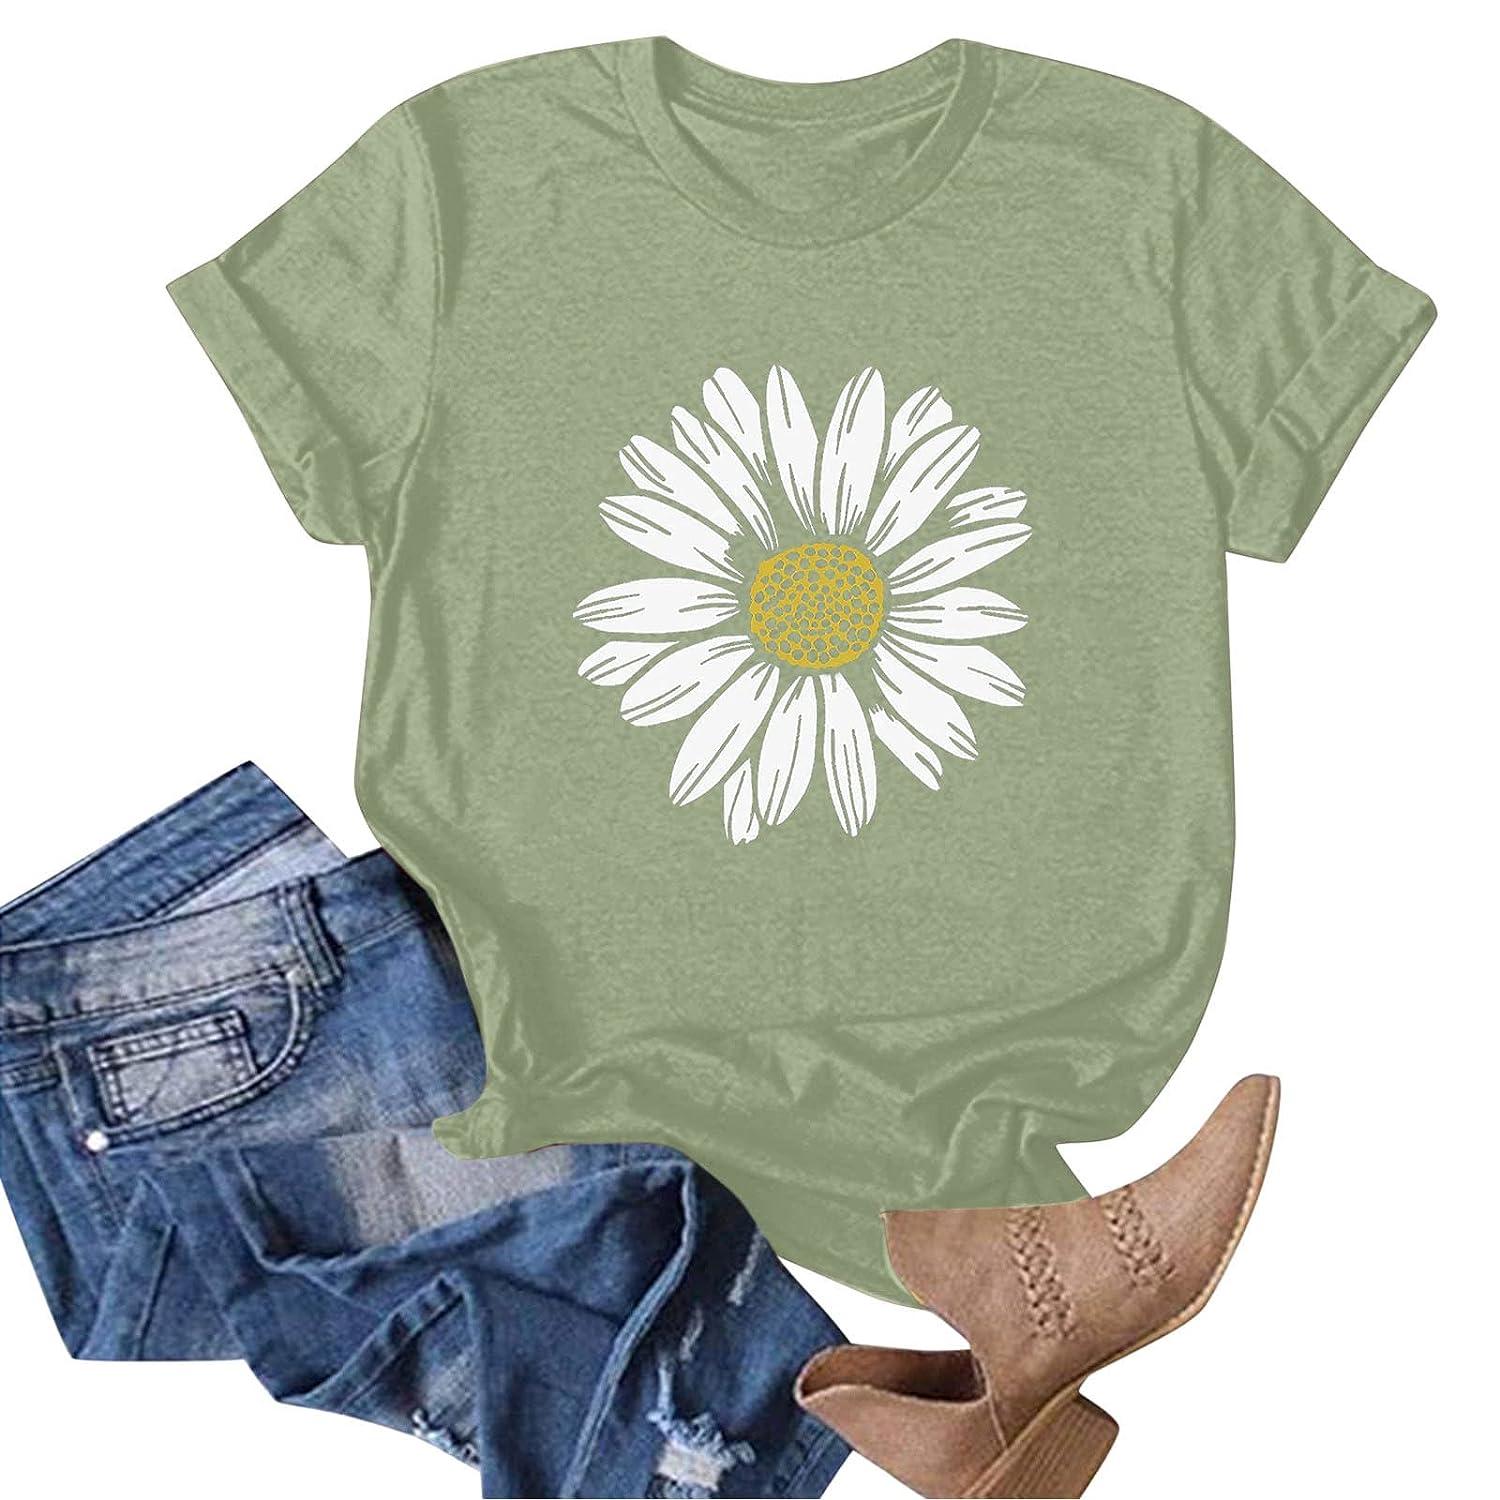  Women Sunflower Summer T Shirt Plus Size Loose Blouse